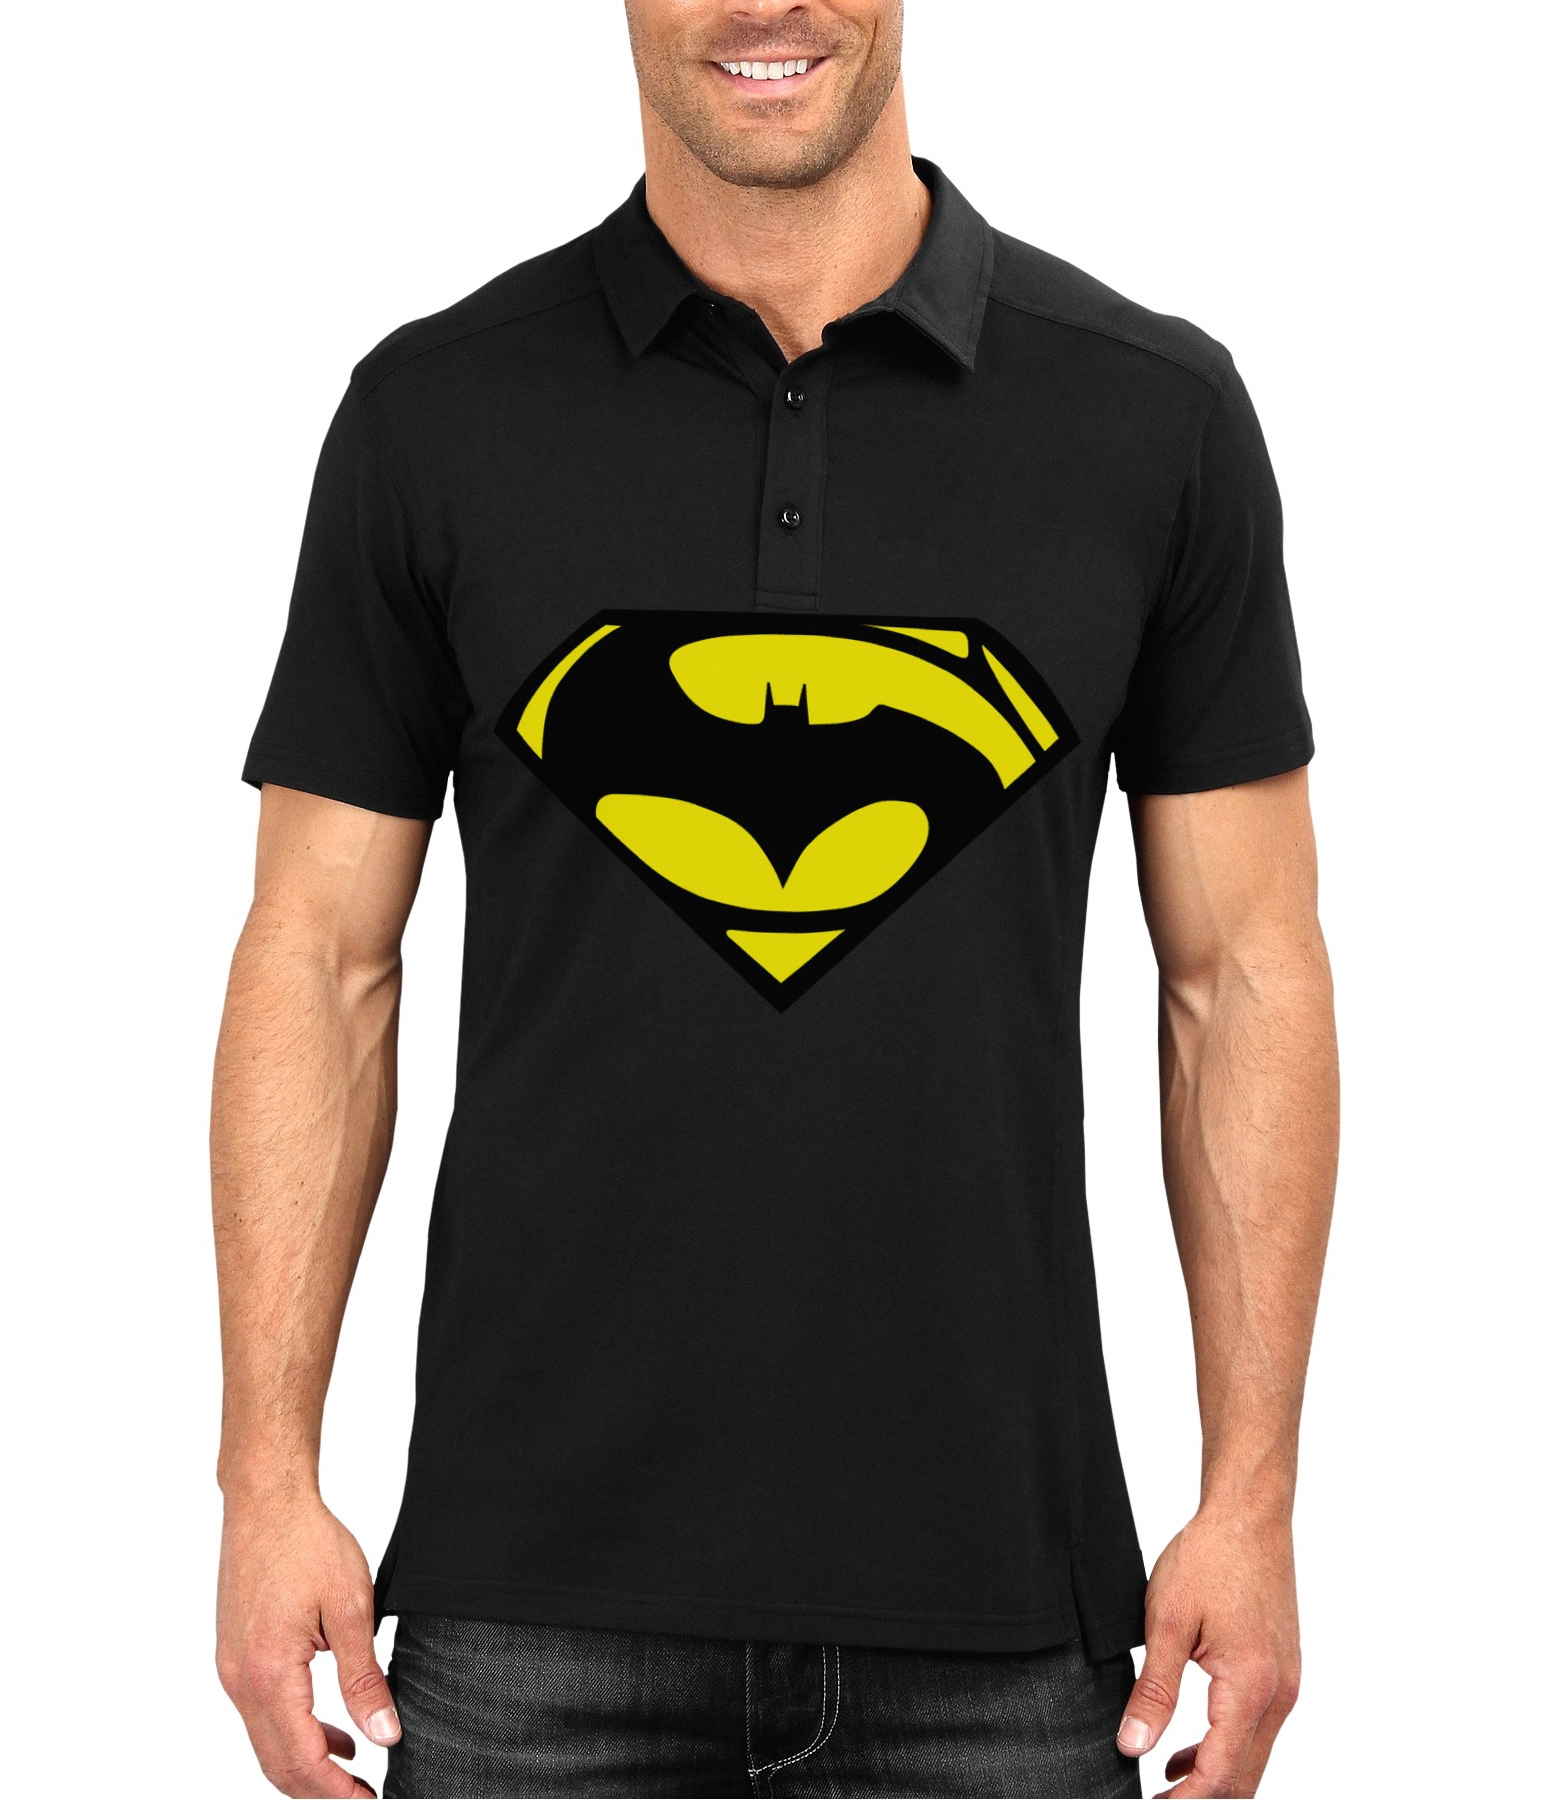 Batman Vs Superman Black Polo Tee - Swag Shirts